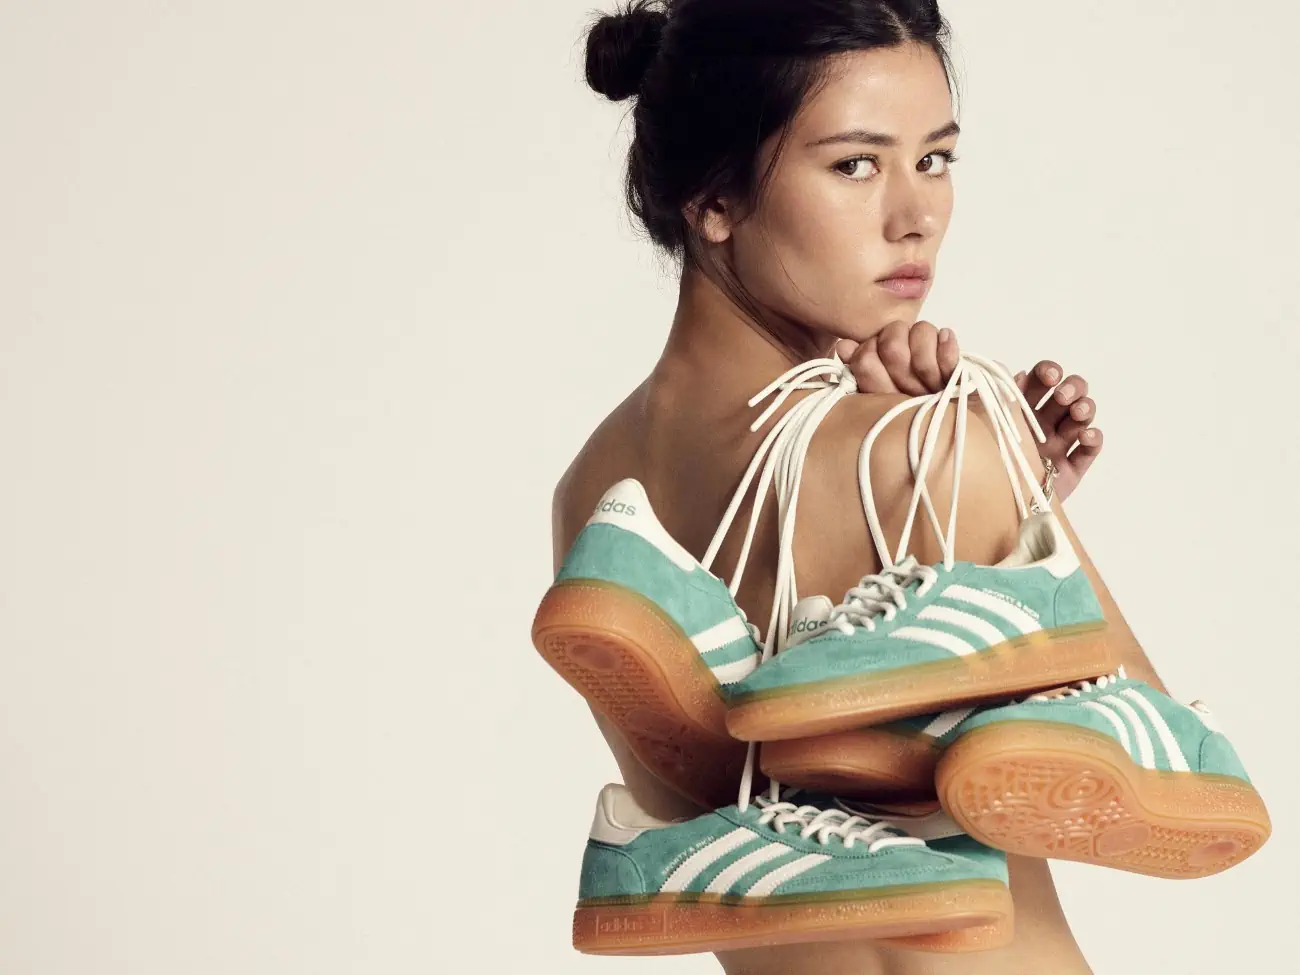 adidas Originals x Sporty & Rich unveil fourth collaboration